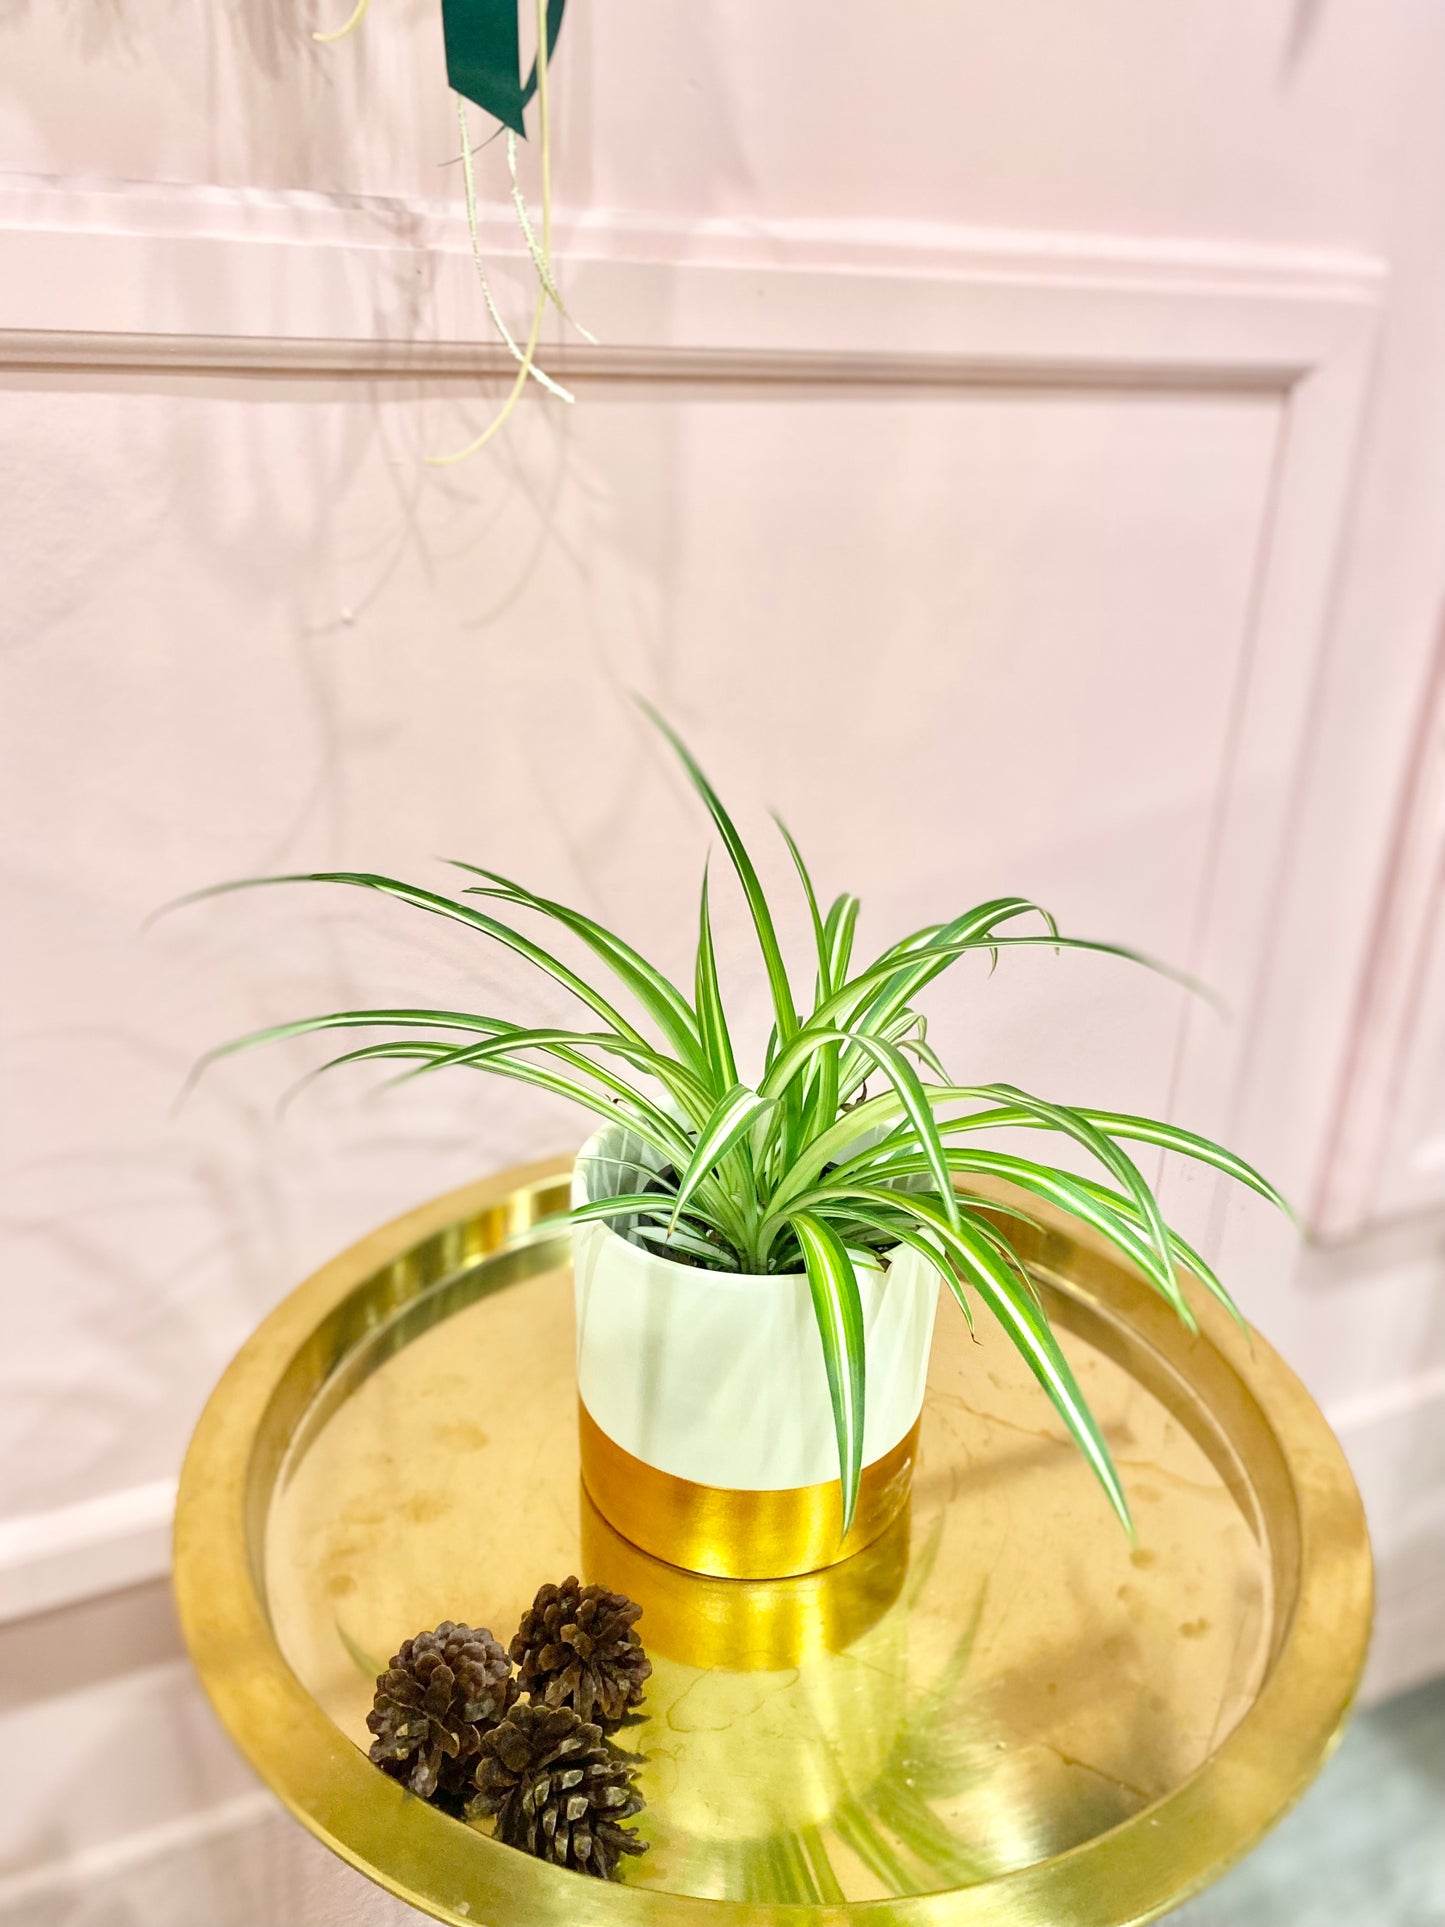 4” Spider plant in a ceramic pot